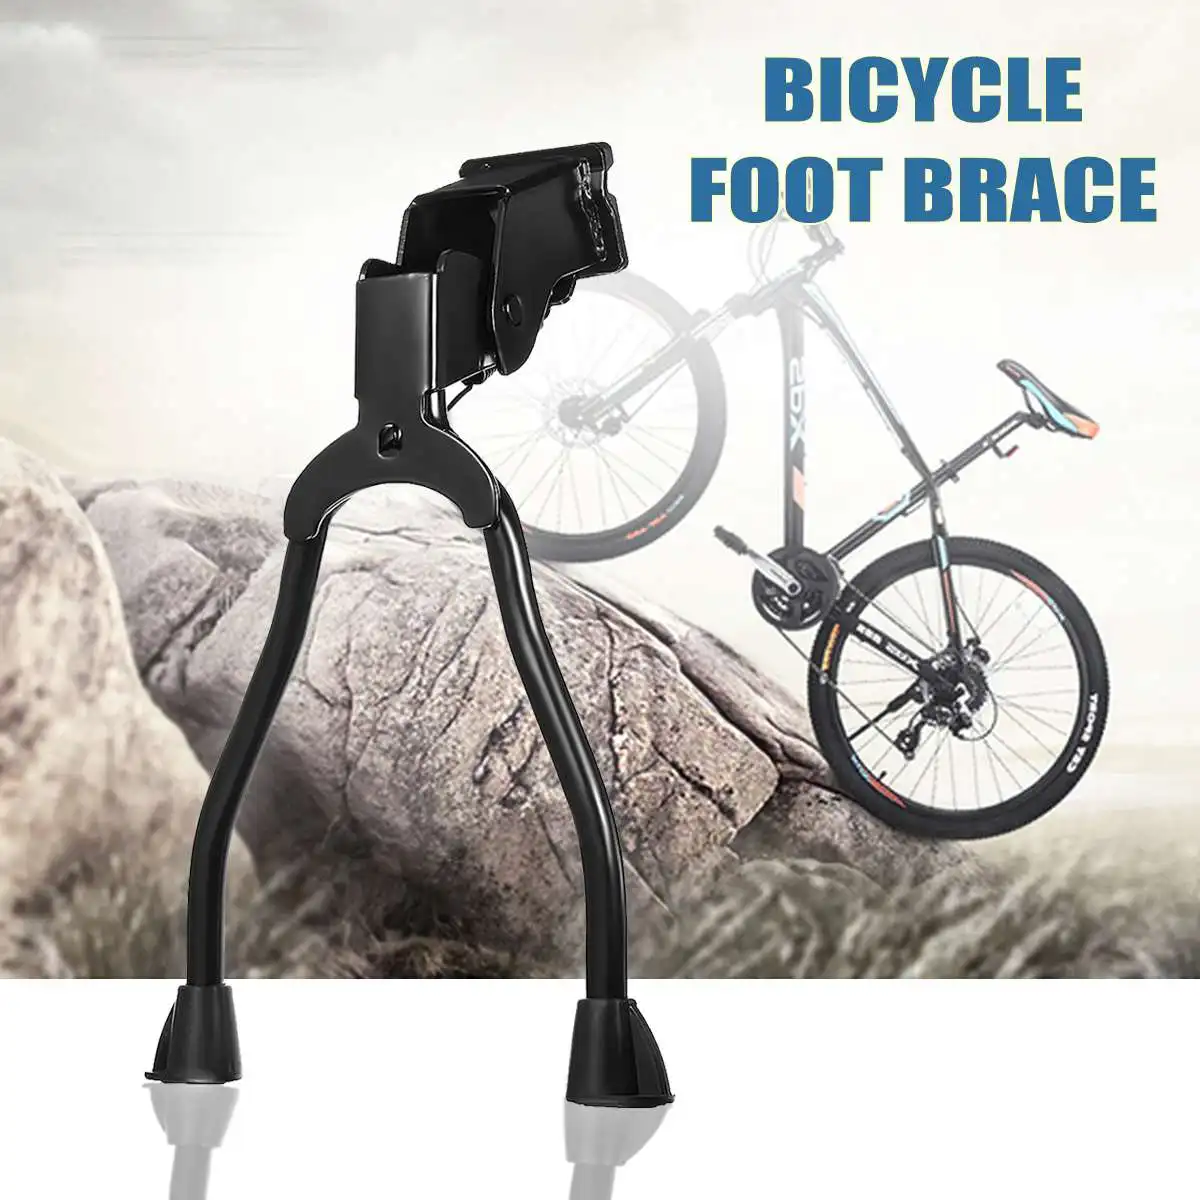 Stable Iron Double Leg Mount Stand Bike Bicycle Kickstand Kick Stand